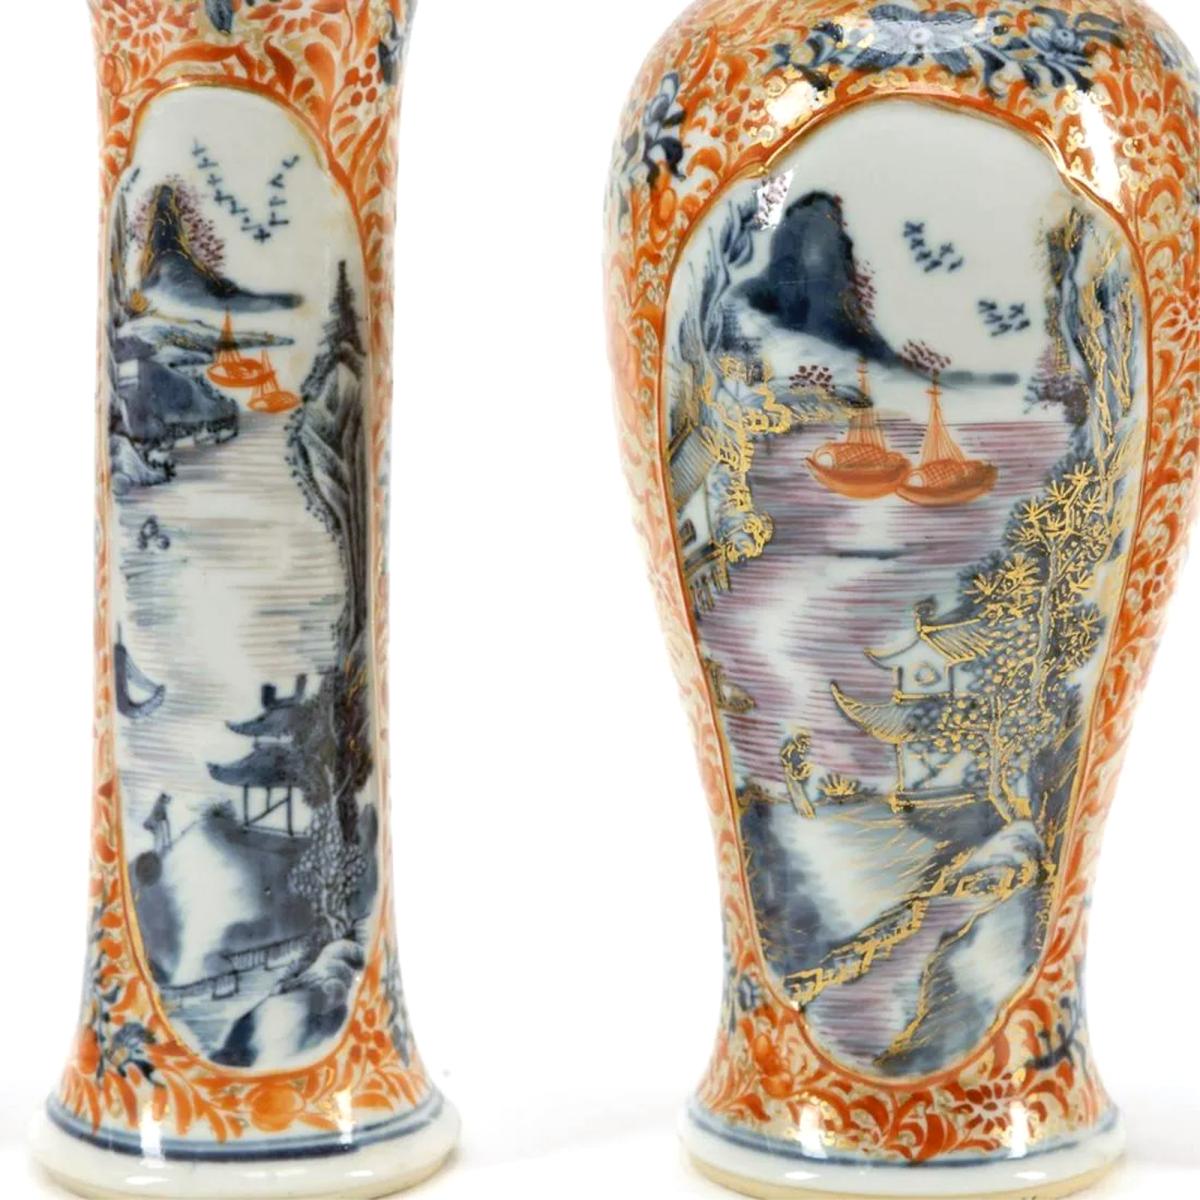 Chinese Export Porcelain Garniture of Five Vases